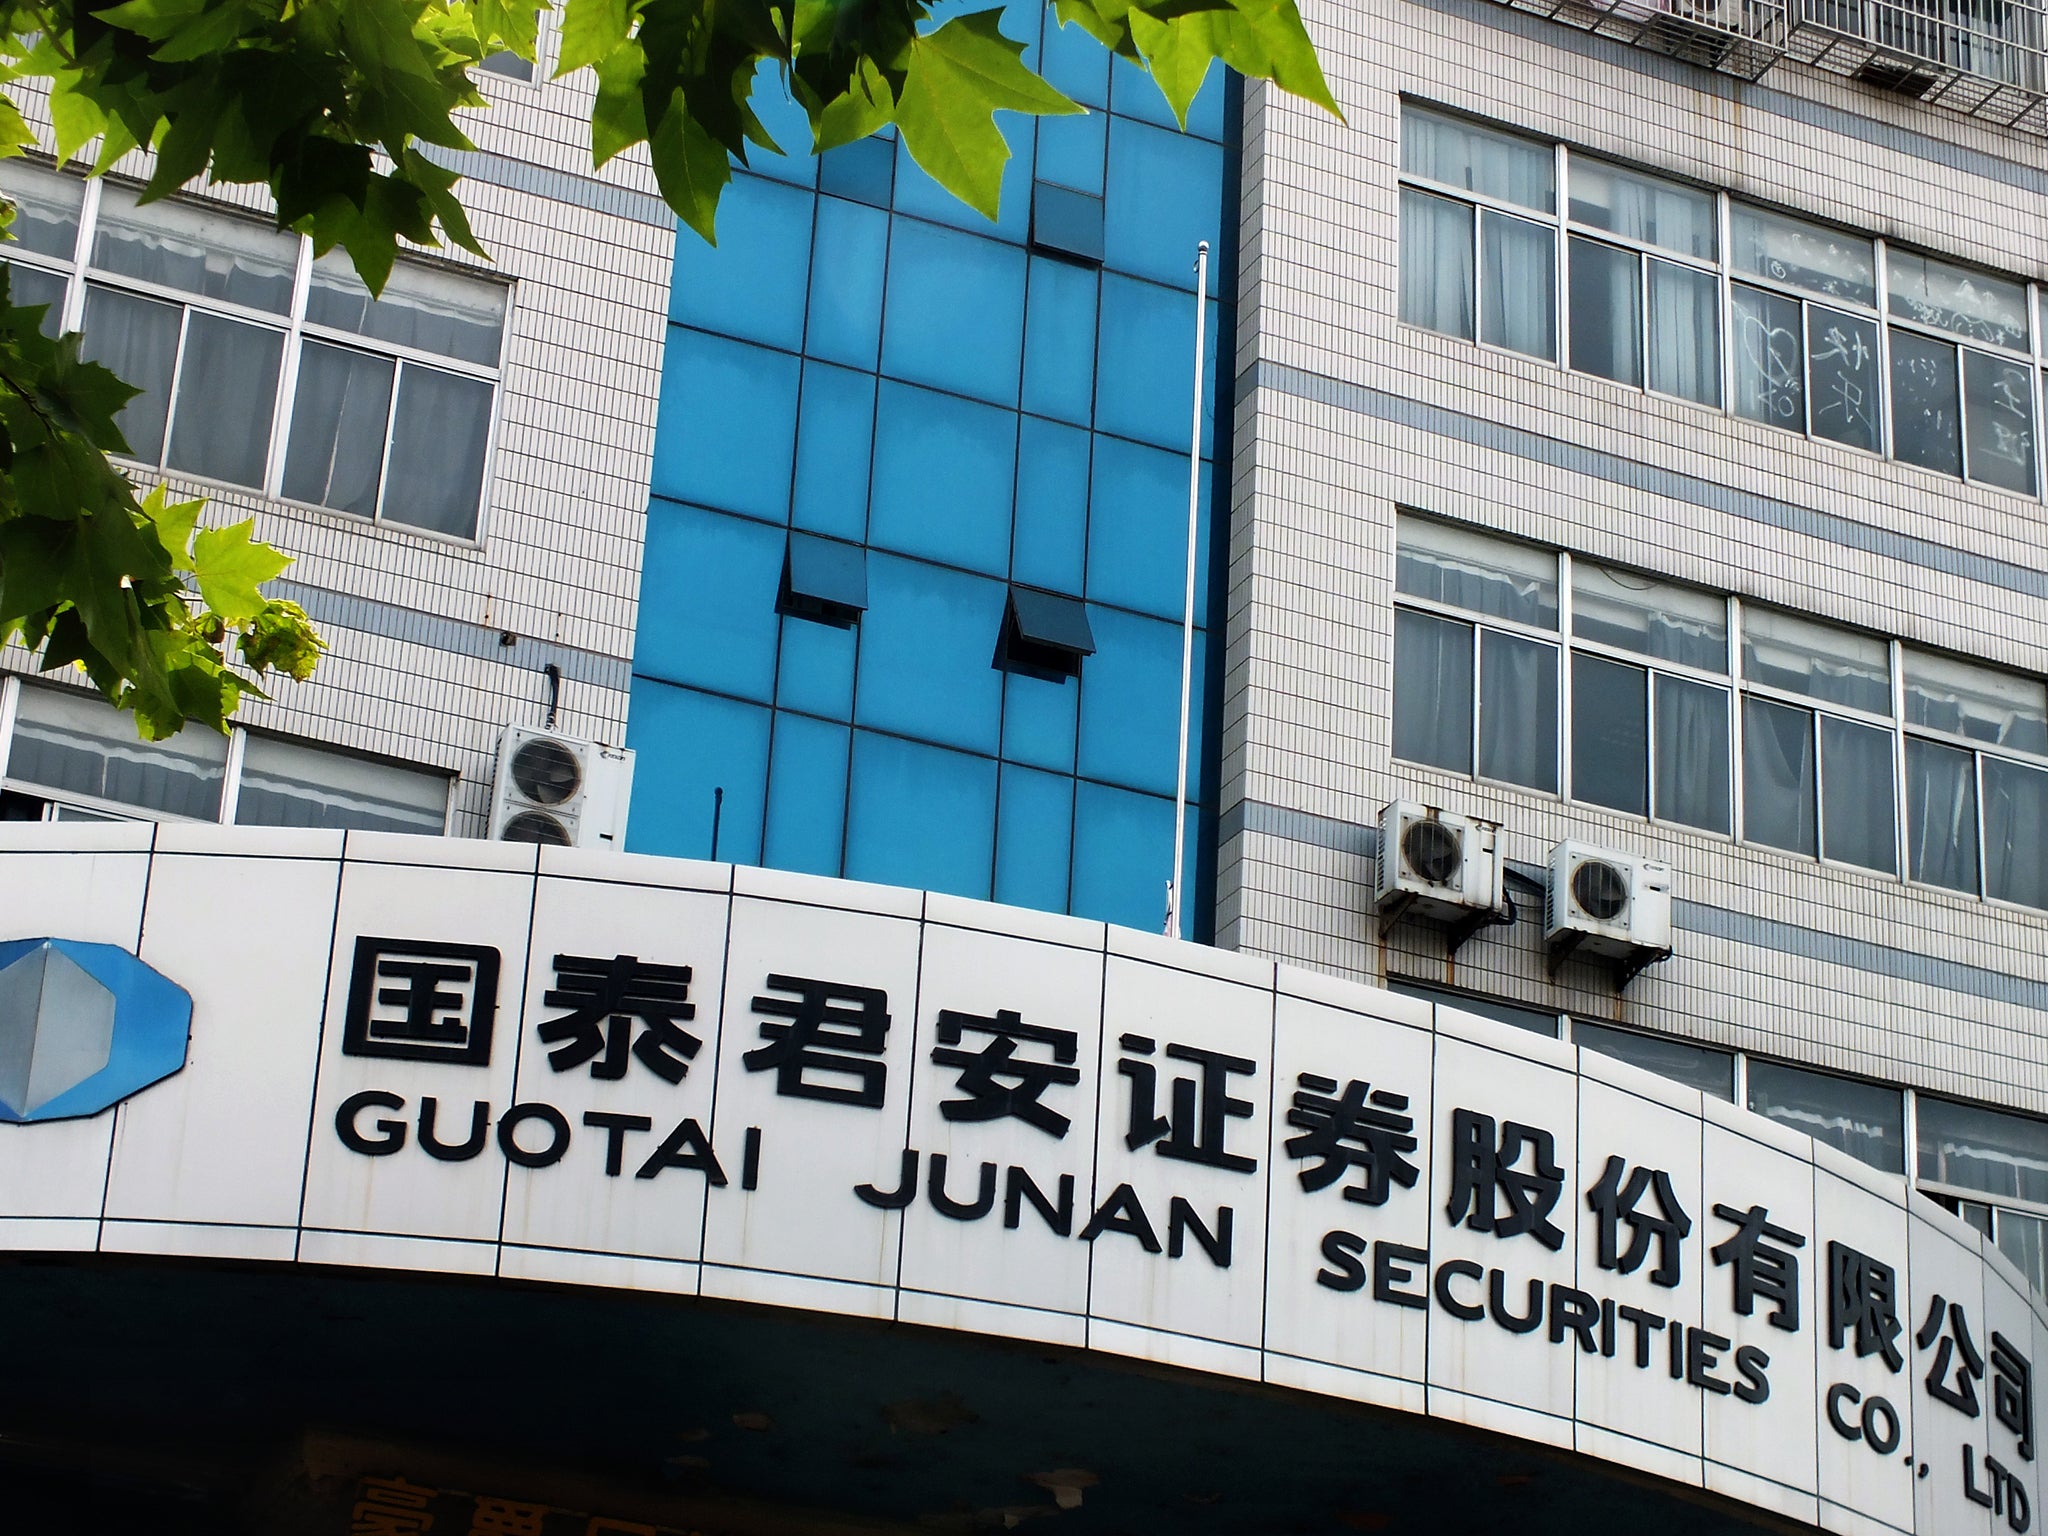 Guotai Junan Securities’ shares tumbled 12 per cent following the announcement